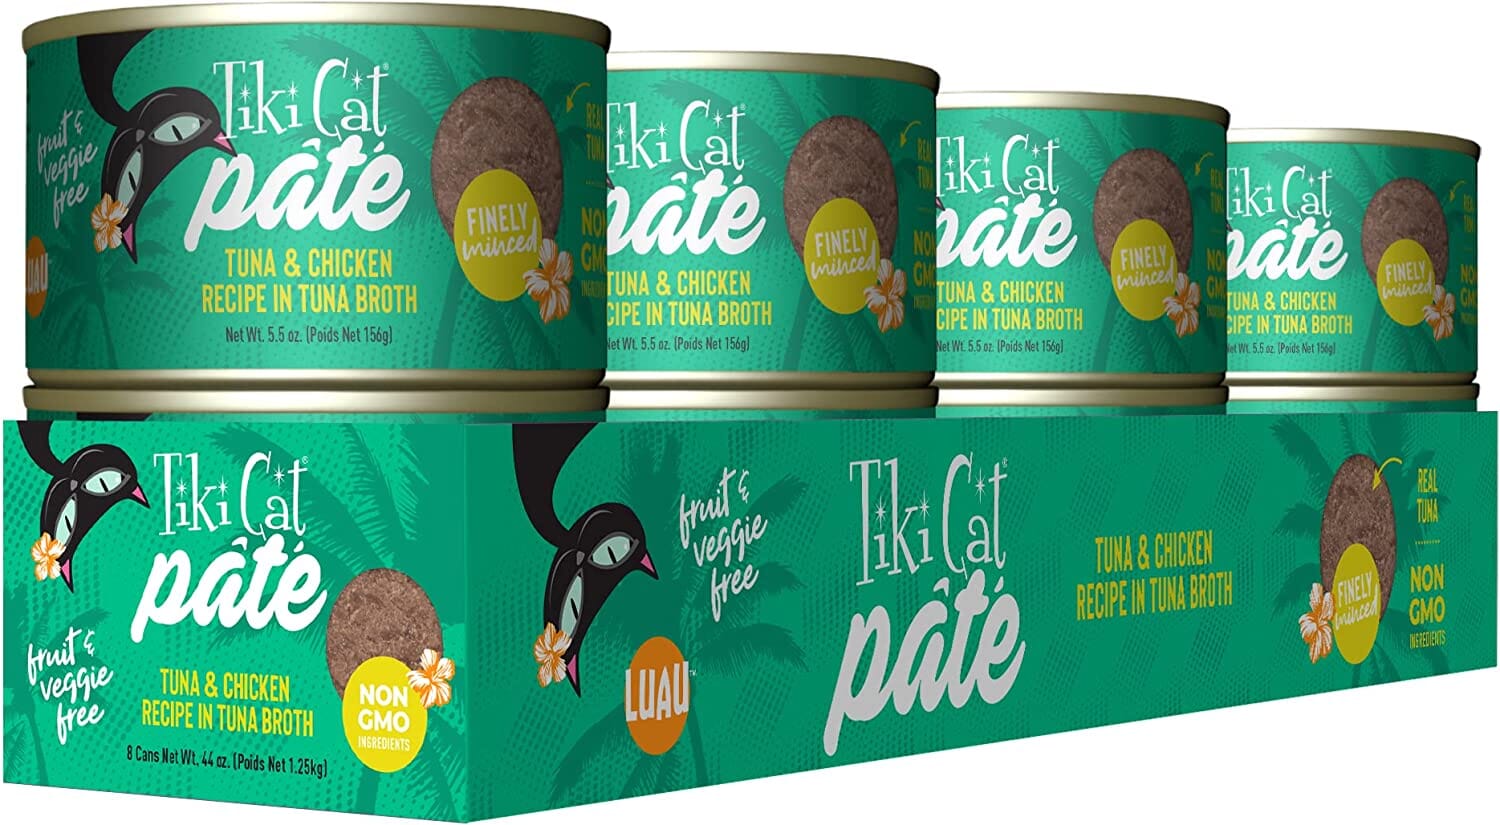 Tiki Cat Ahi Tuna & Chicken Pate Luau Canned Cat Food - 5.5 Oz - Case of 8  